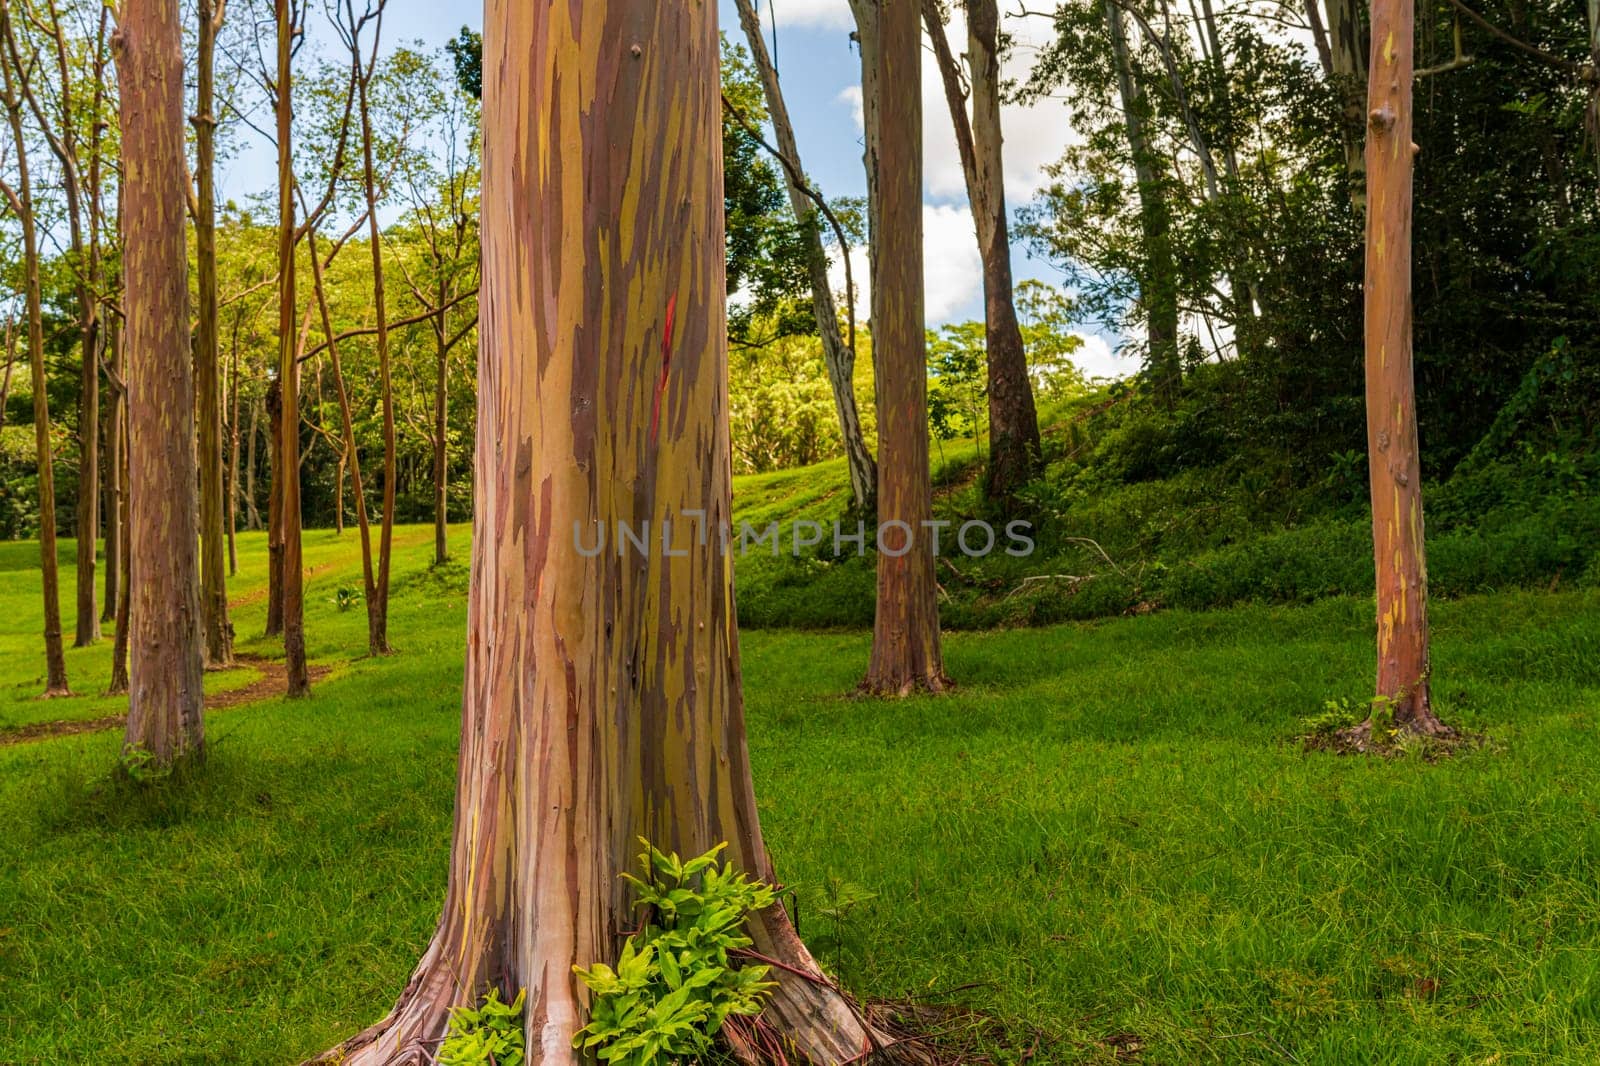 Group of rainbow eucalyptus trees in Keahua Arboretum by steheap